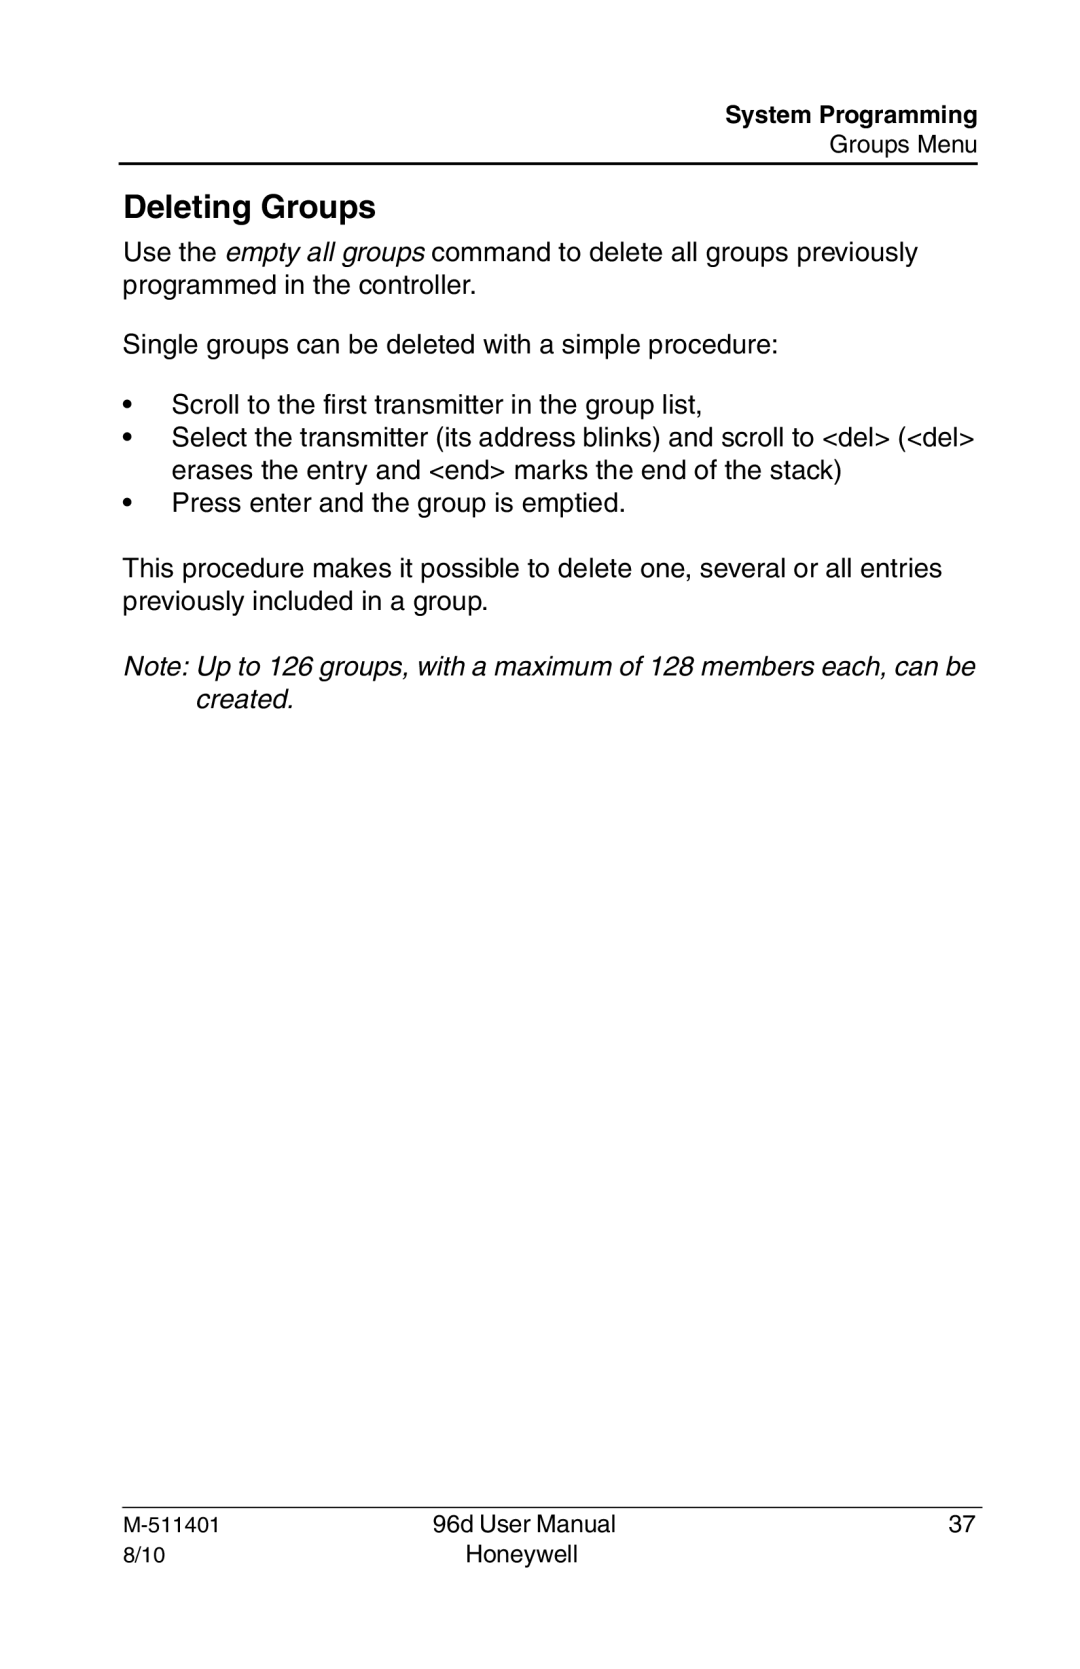 Honeywell 96D user manual Deleting Groups 